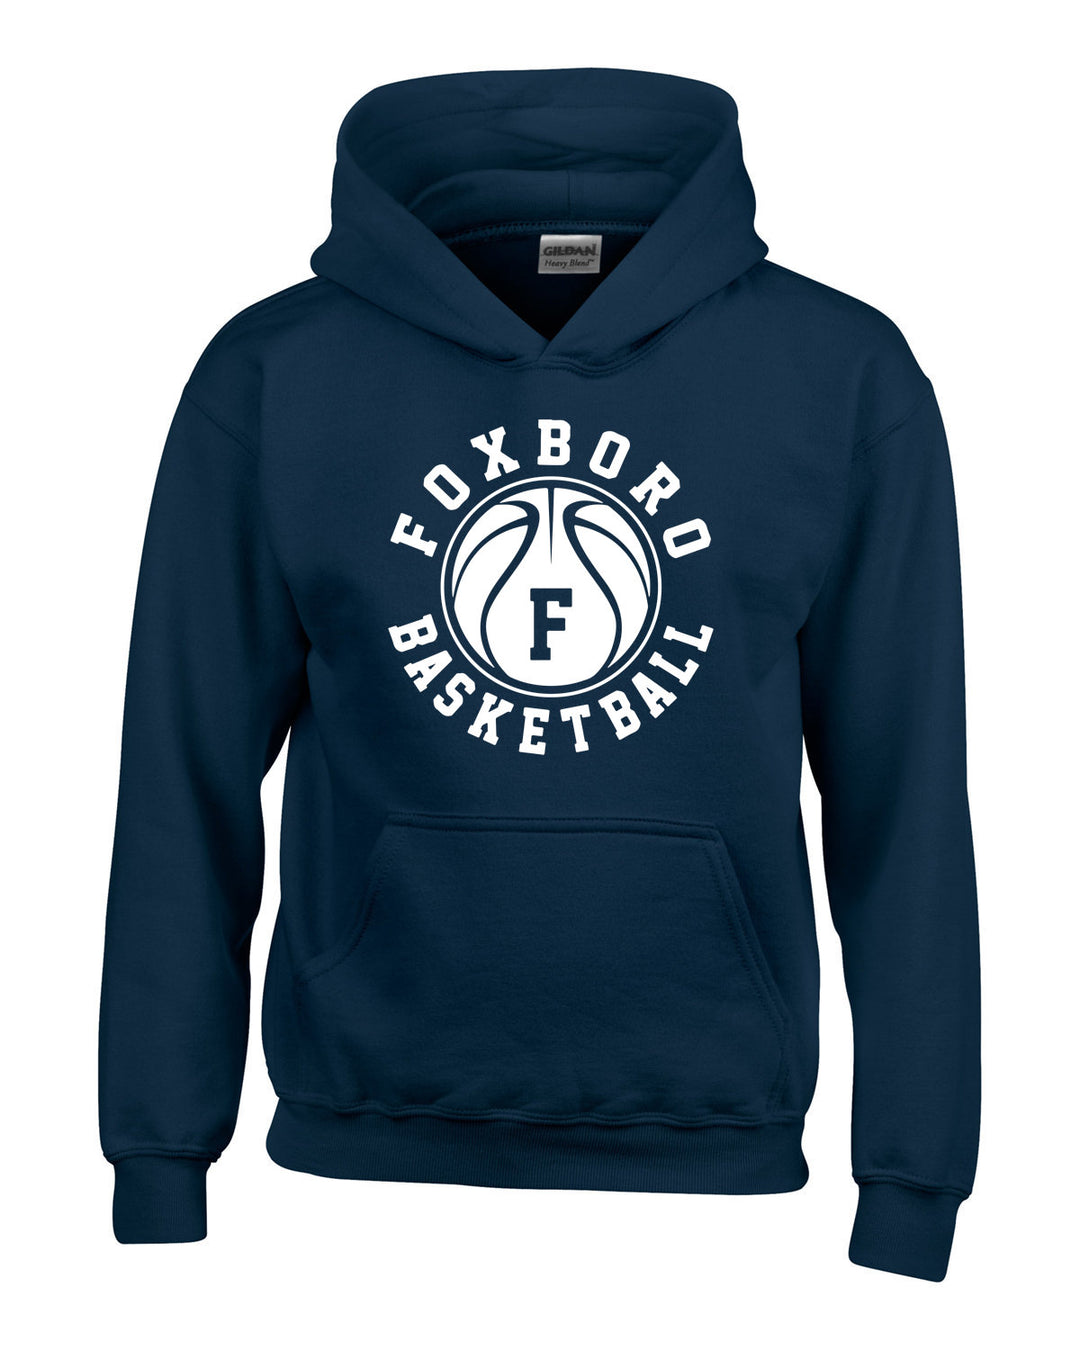 Foxboro Youth Basketball Gildan Youth Hooded Sweatshirt (G185B)